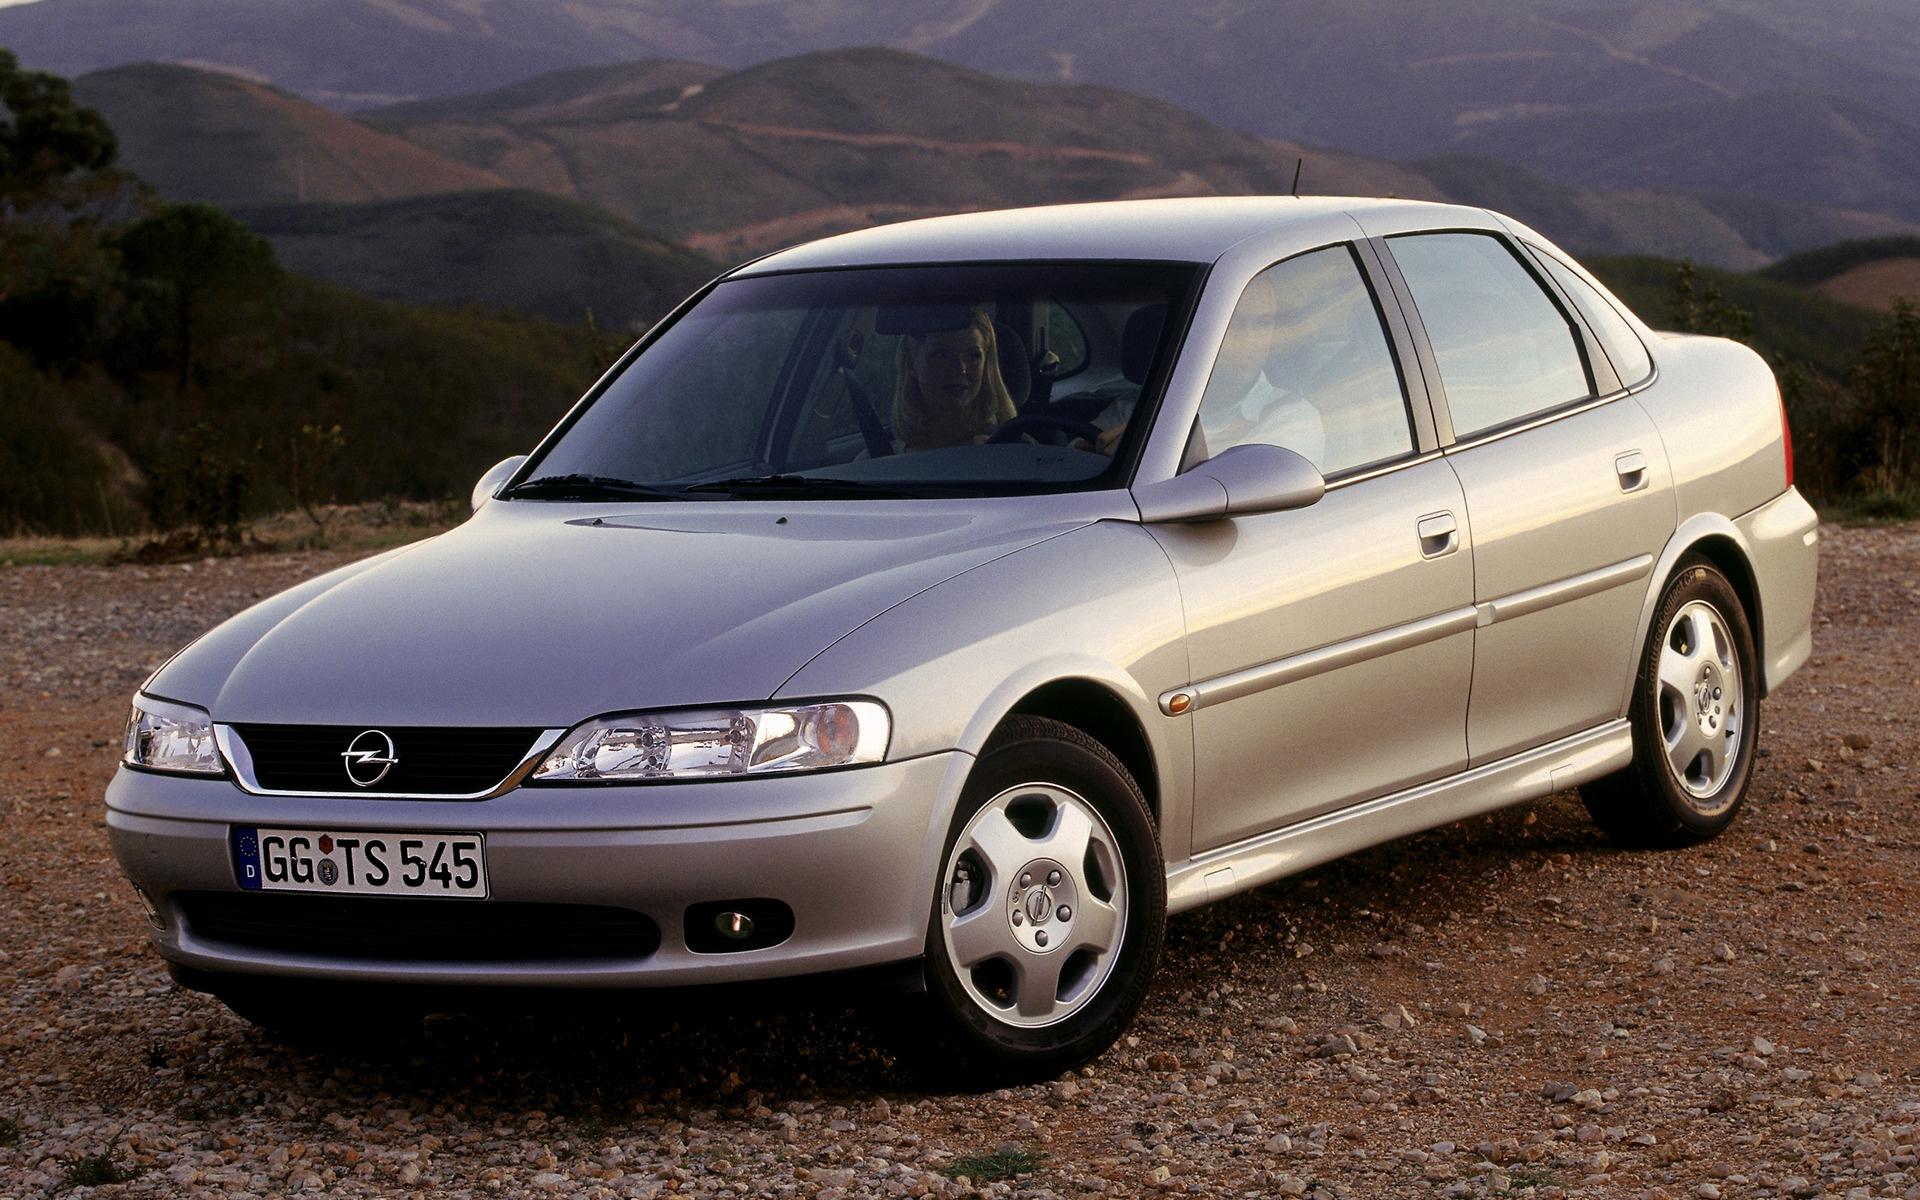 Вектра б 1.8 бензин. Opel Vectra 1999. Opel Vectra 1.8. Opel Vectra b 1995 - 2000 седан. Опель Вектра б 1.6 1999.